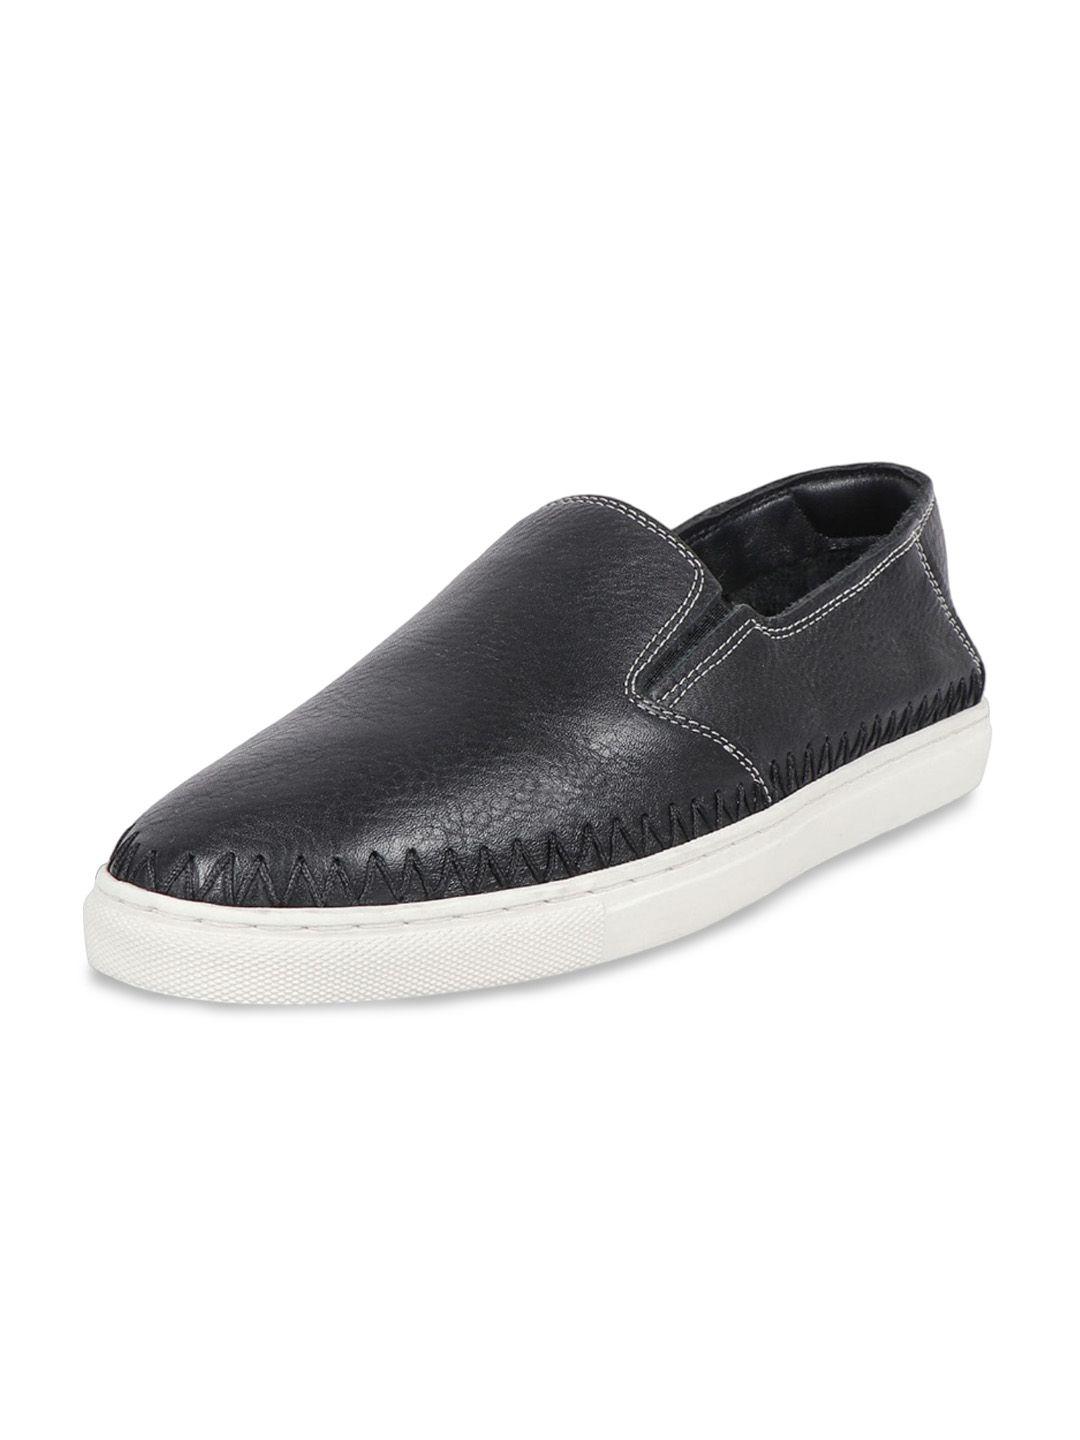 hidesign-men-black-perforations-leather-slip-on-sneakers